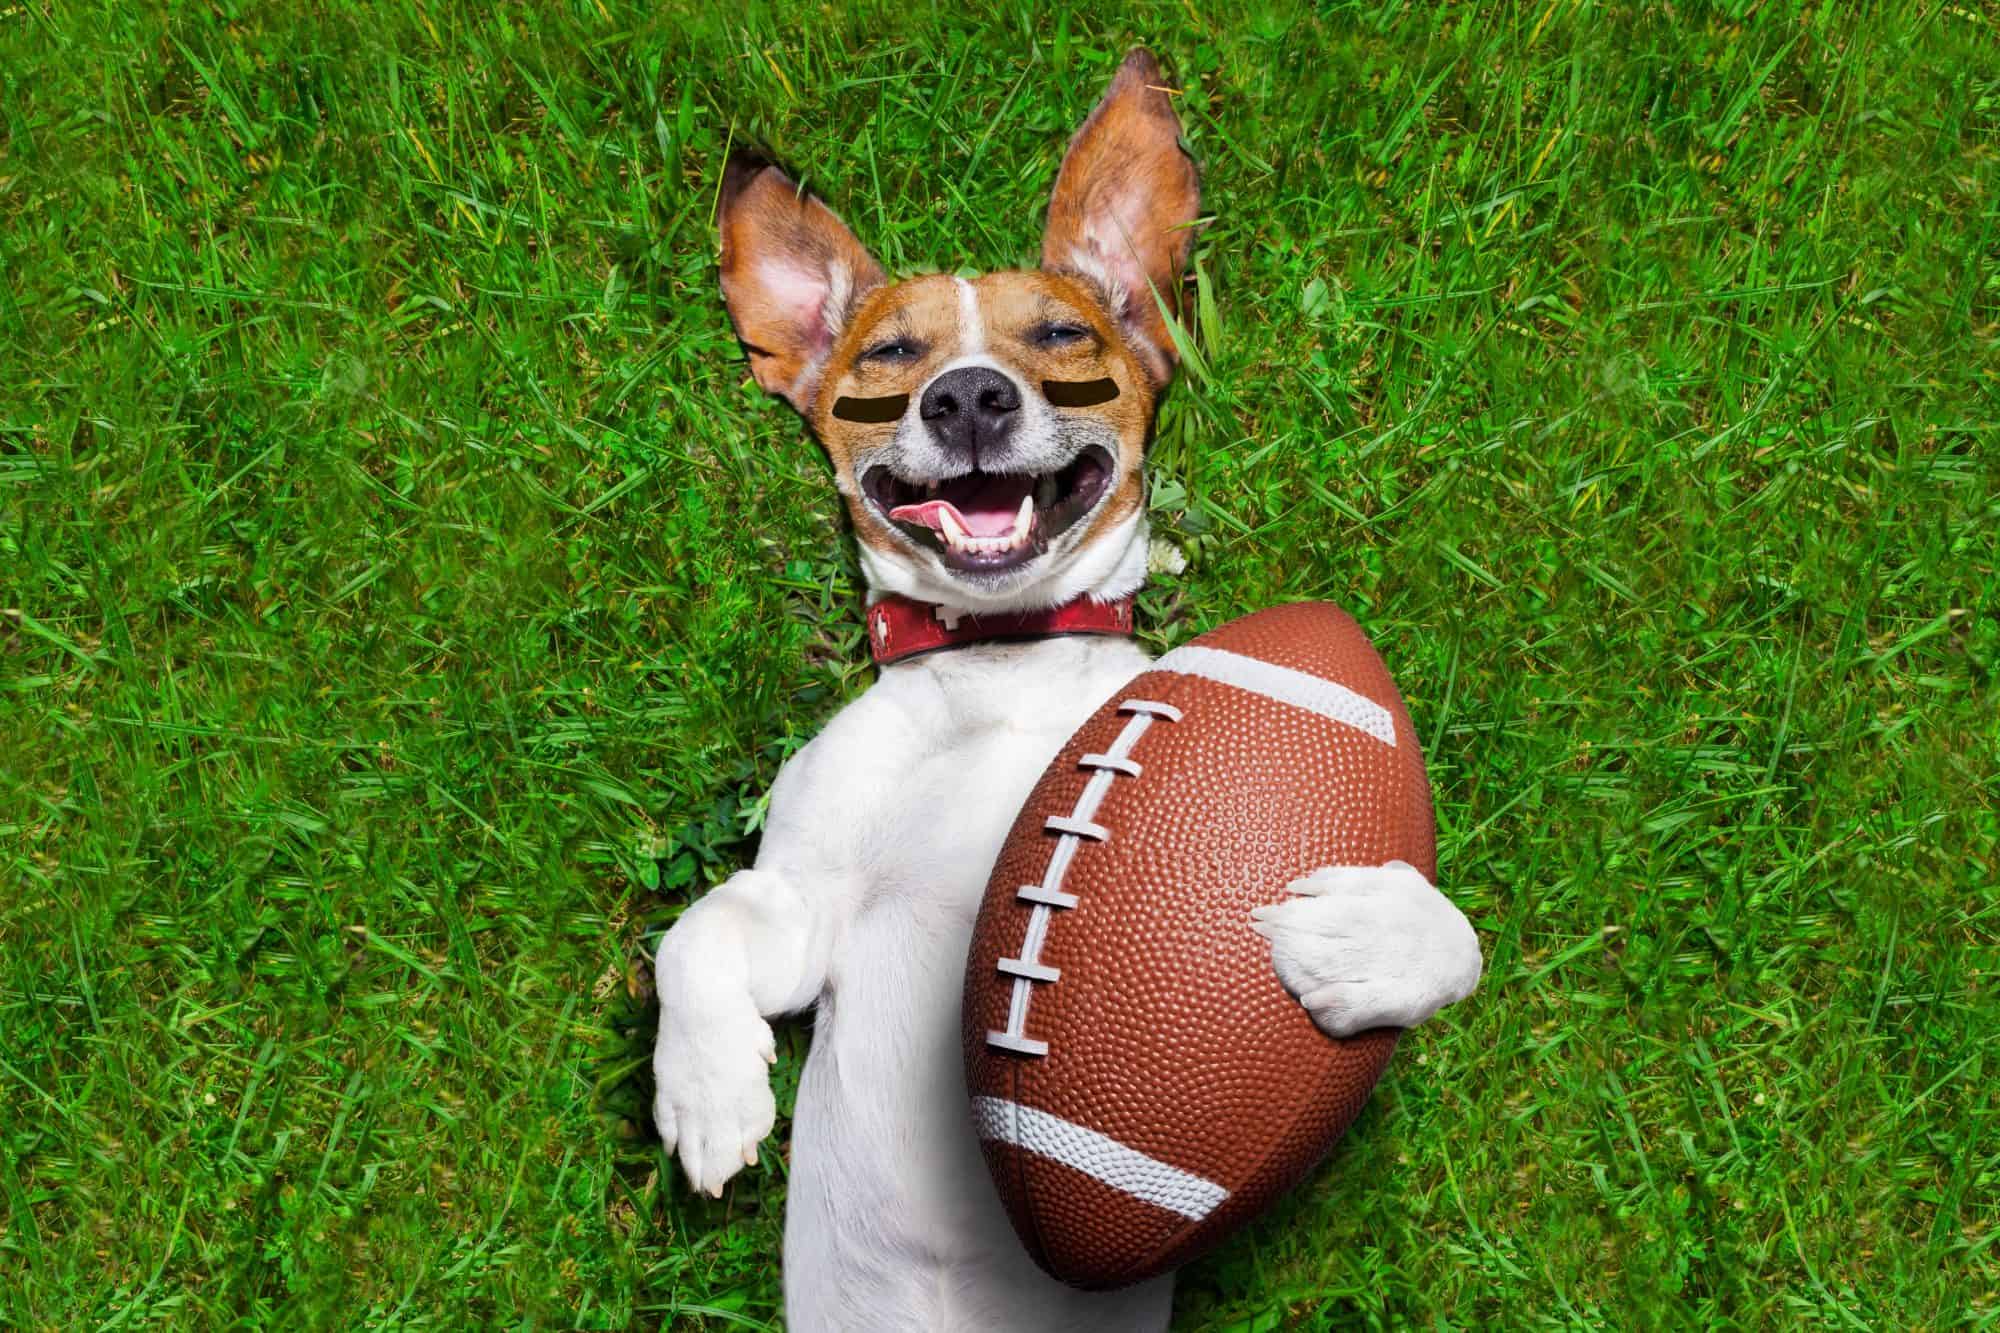 Dog with football.